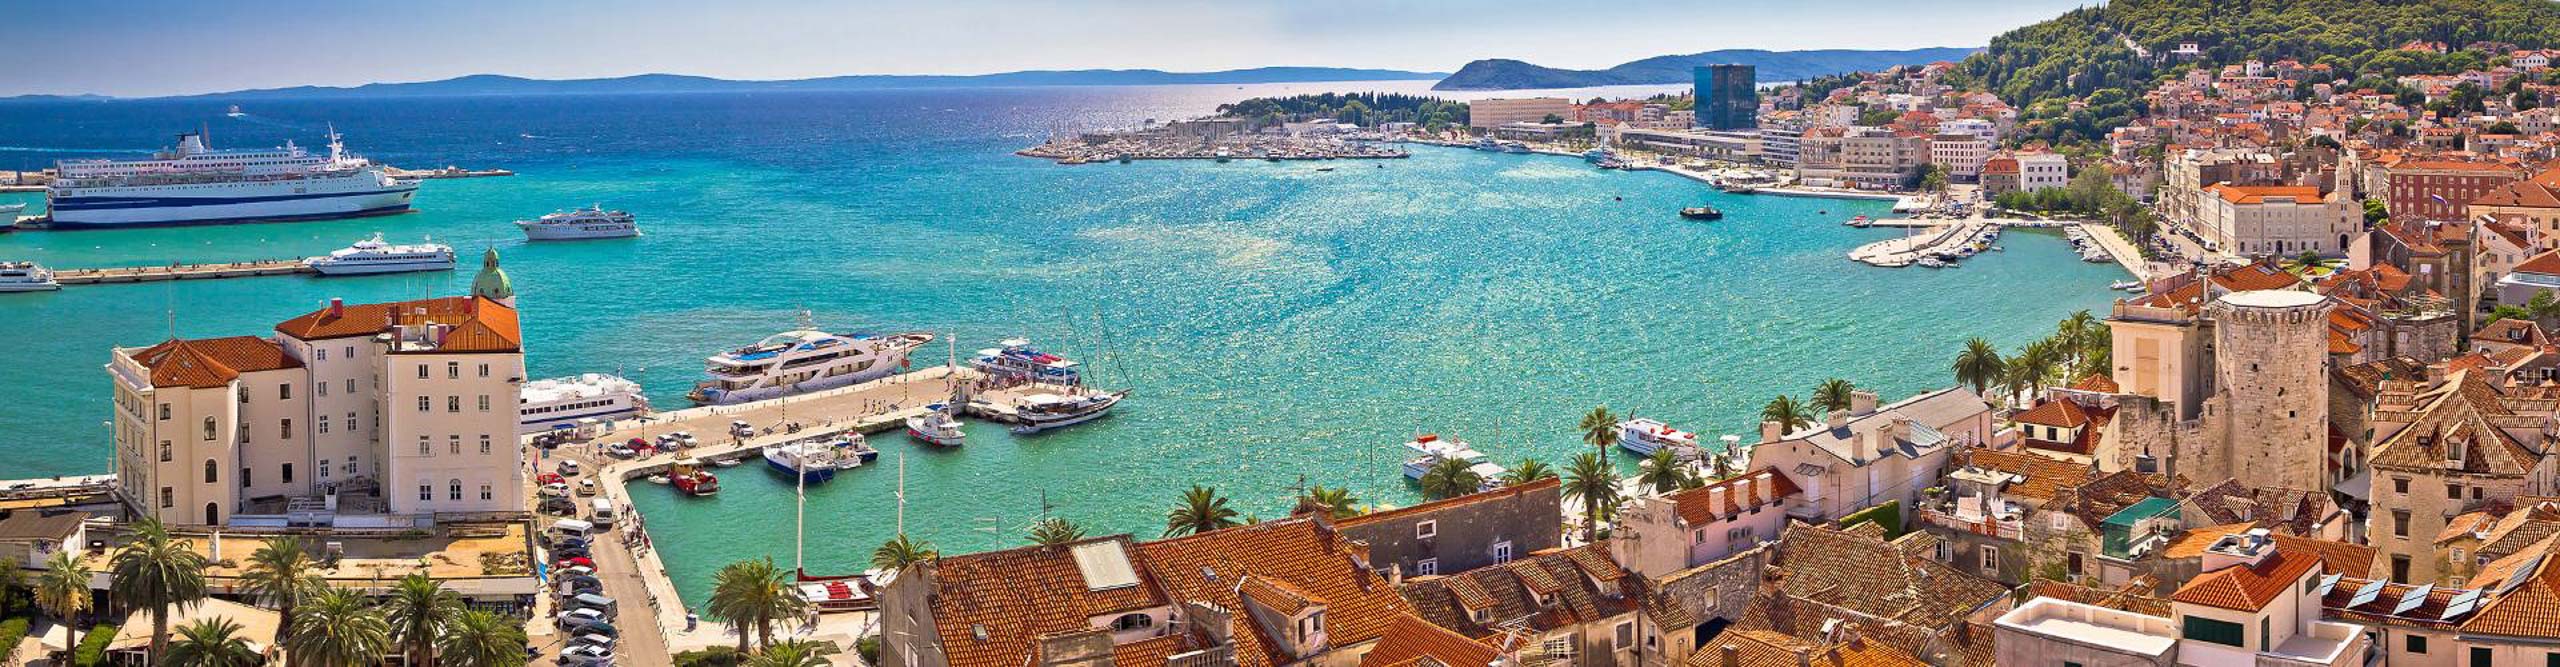 Dubrovnik harbour in the summer 